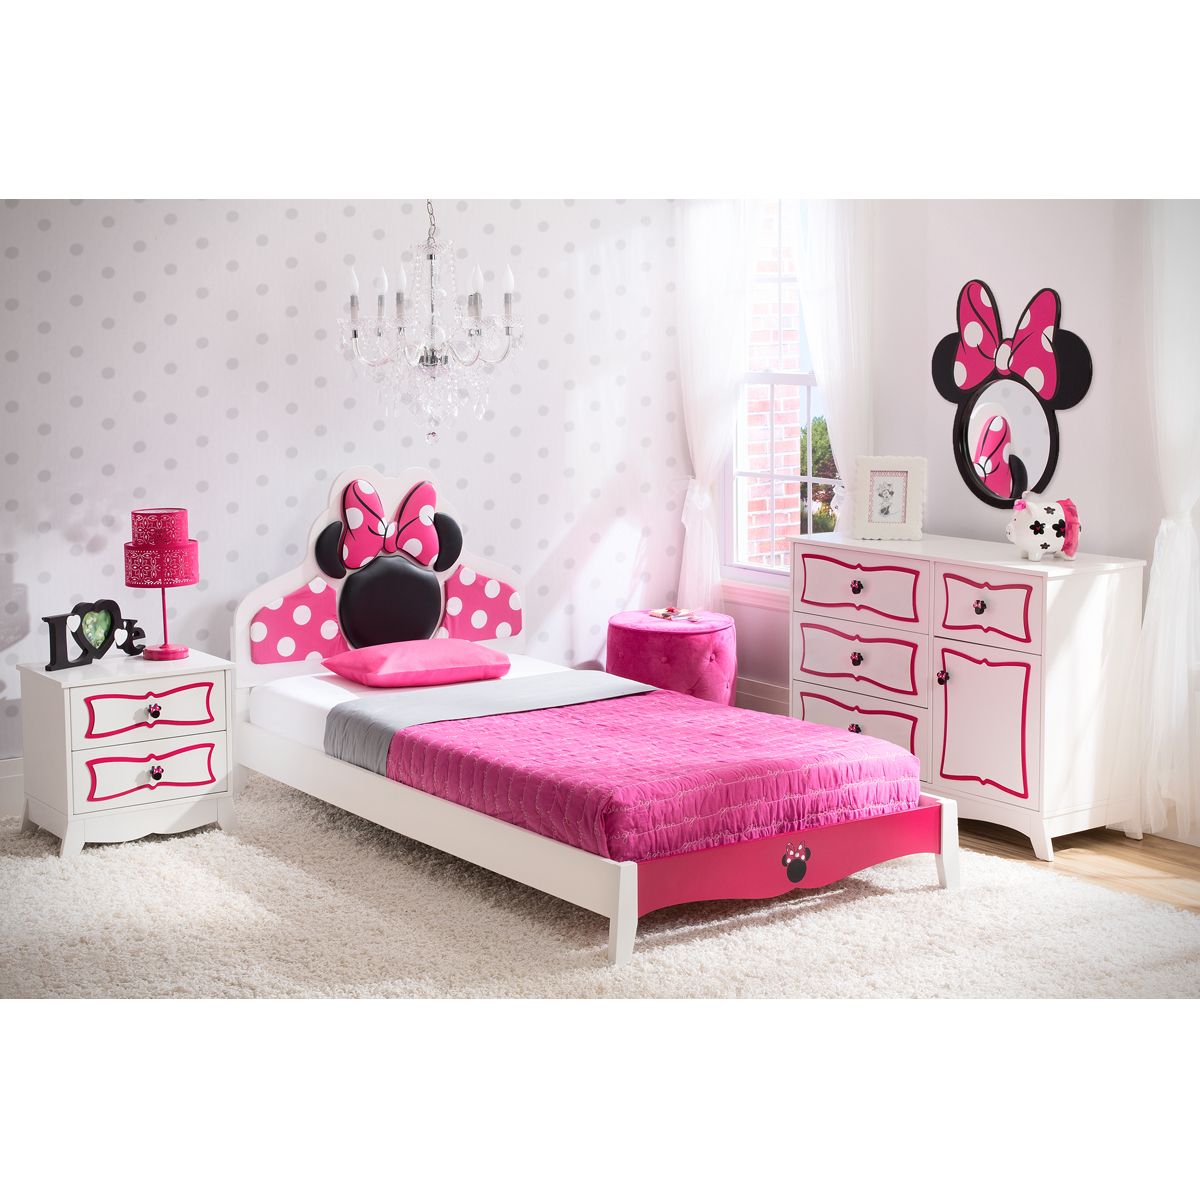 Minnie Mouse Bedroom Set